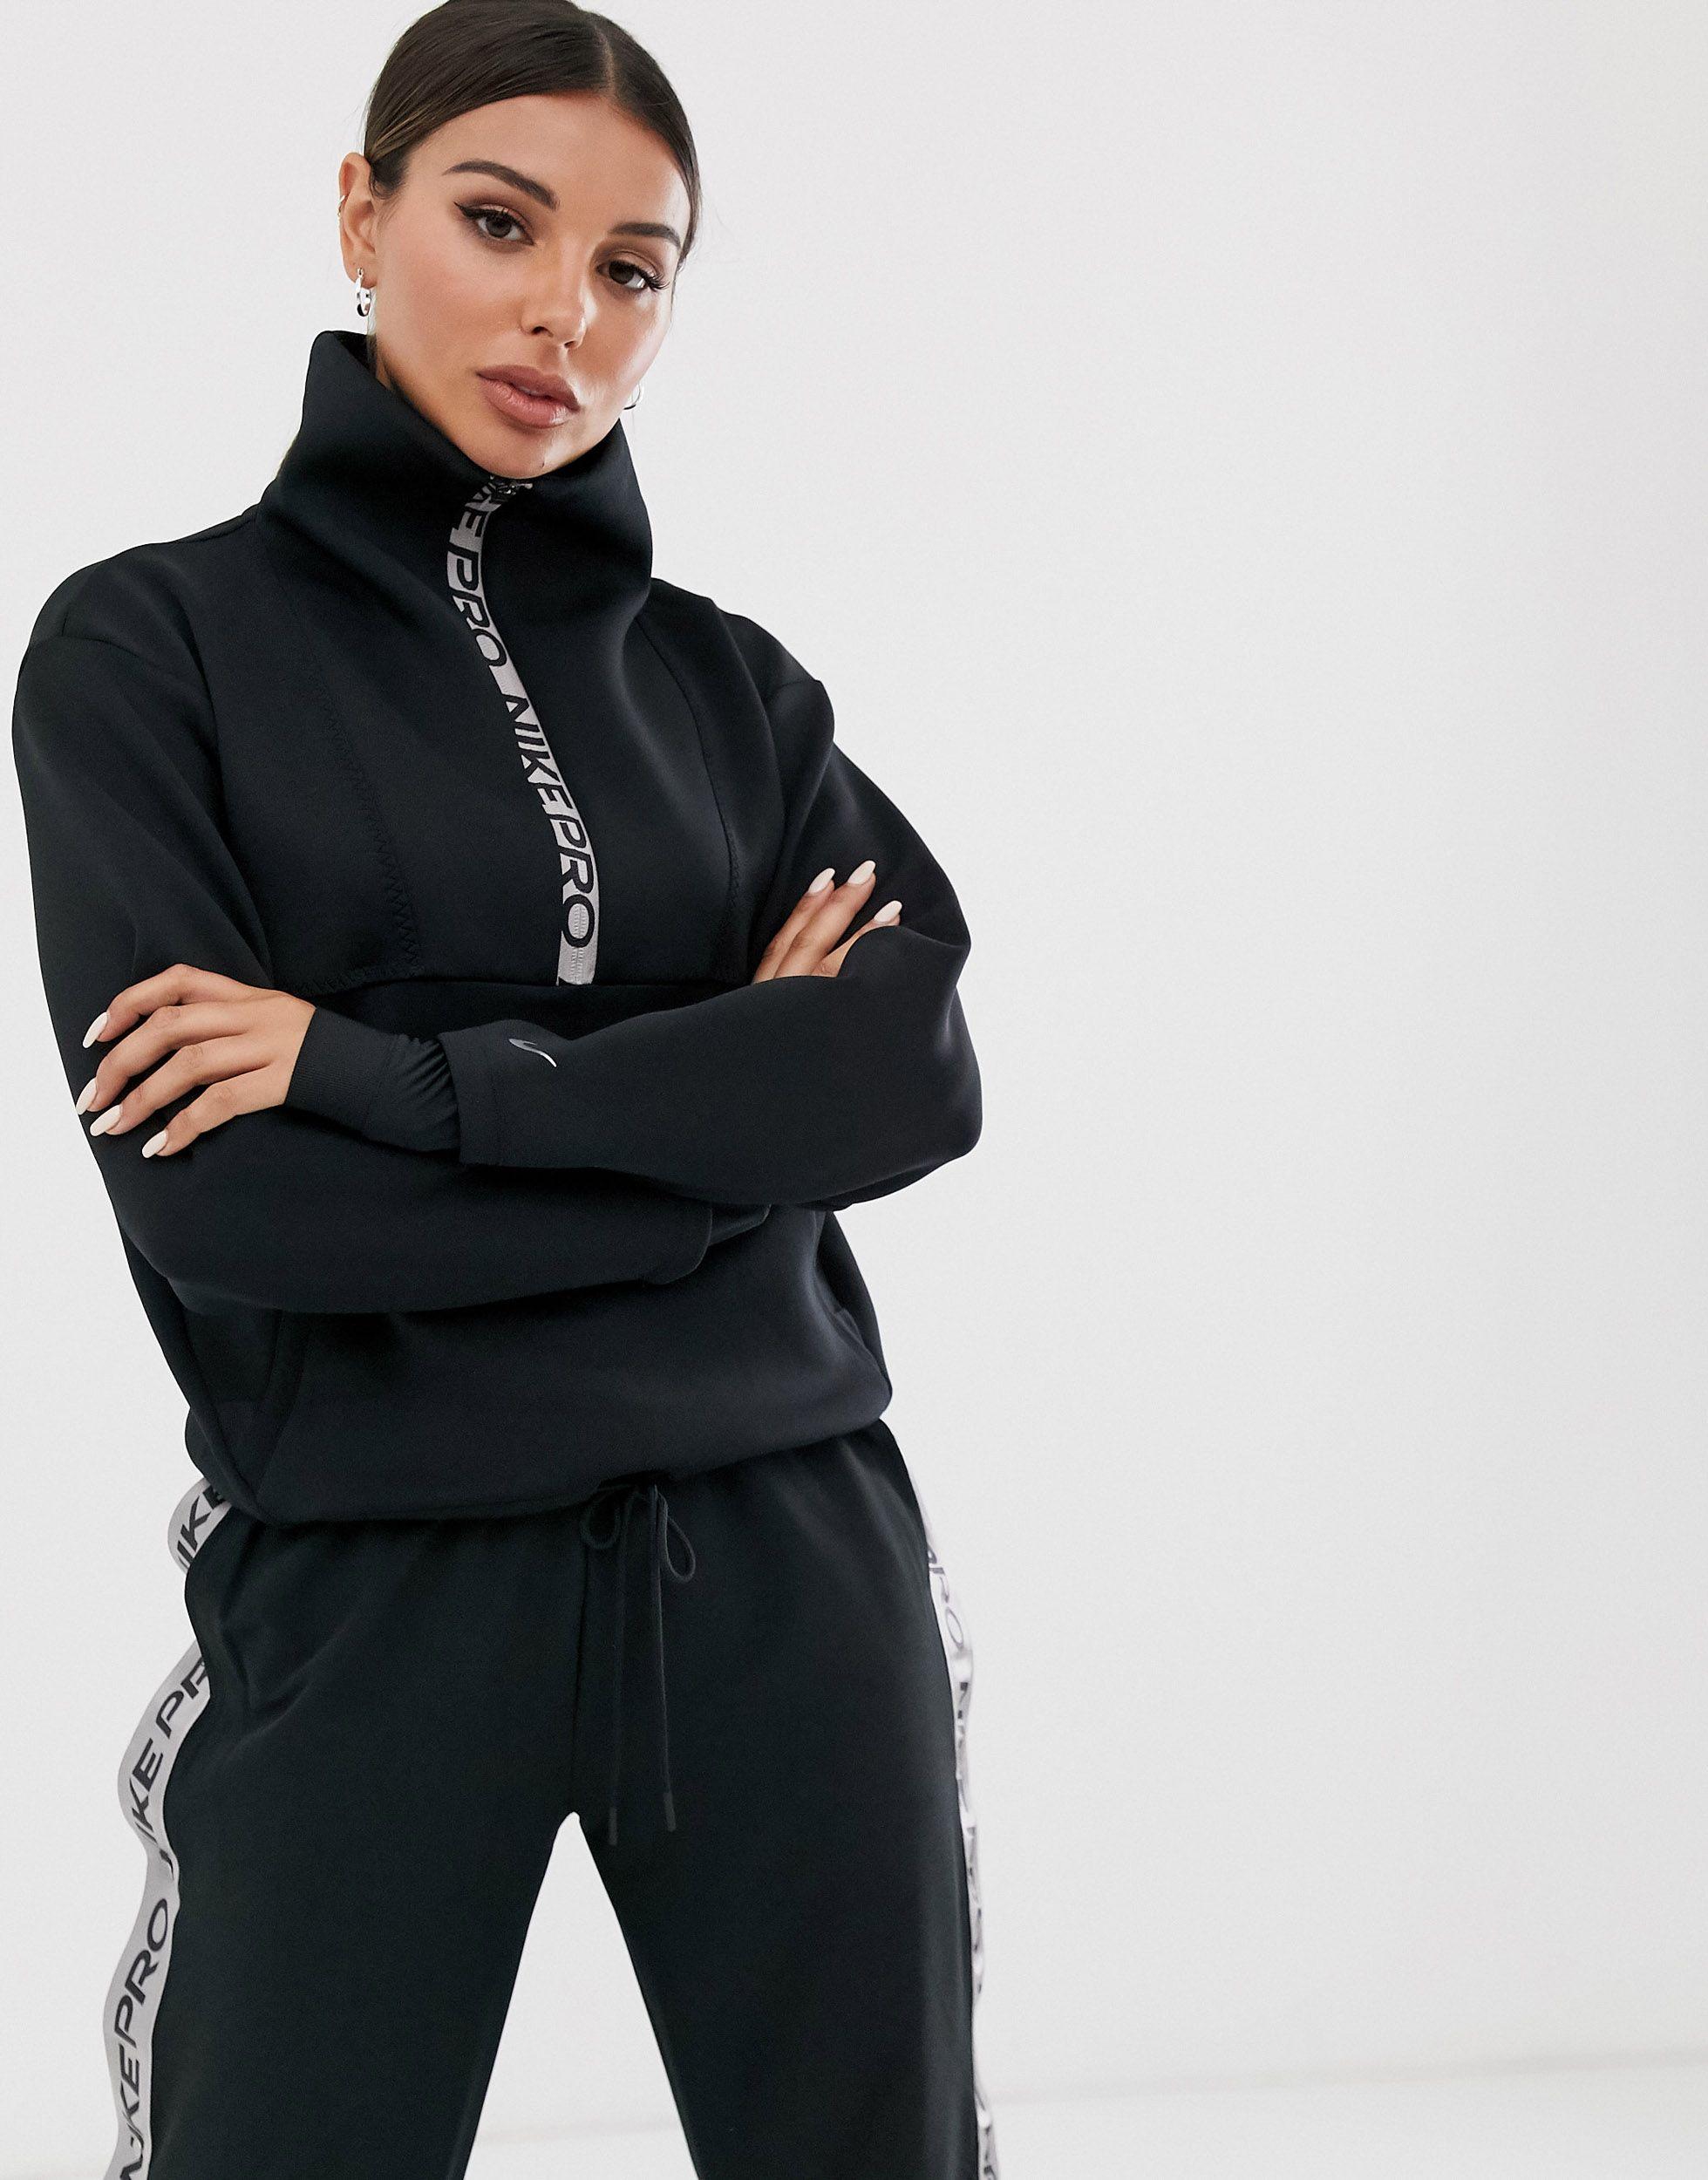 Nike Synthetic Nike Pro Training Half Zip Sweatshirt in Black | Lyst